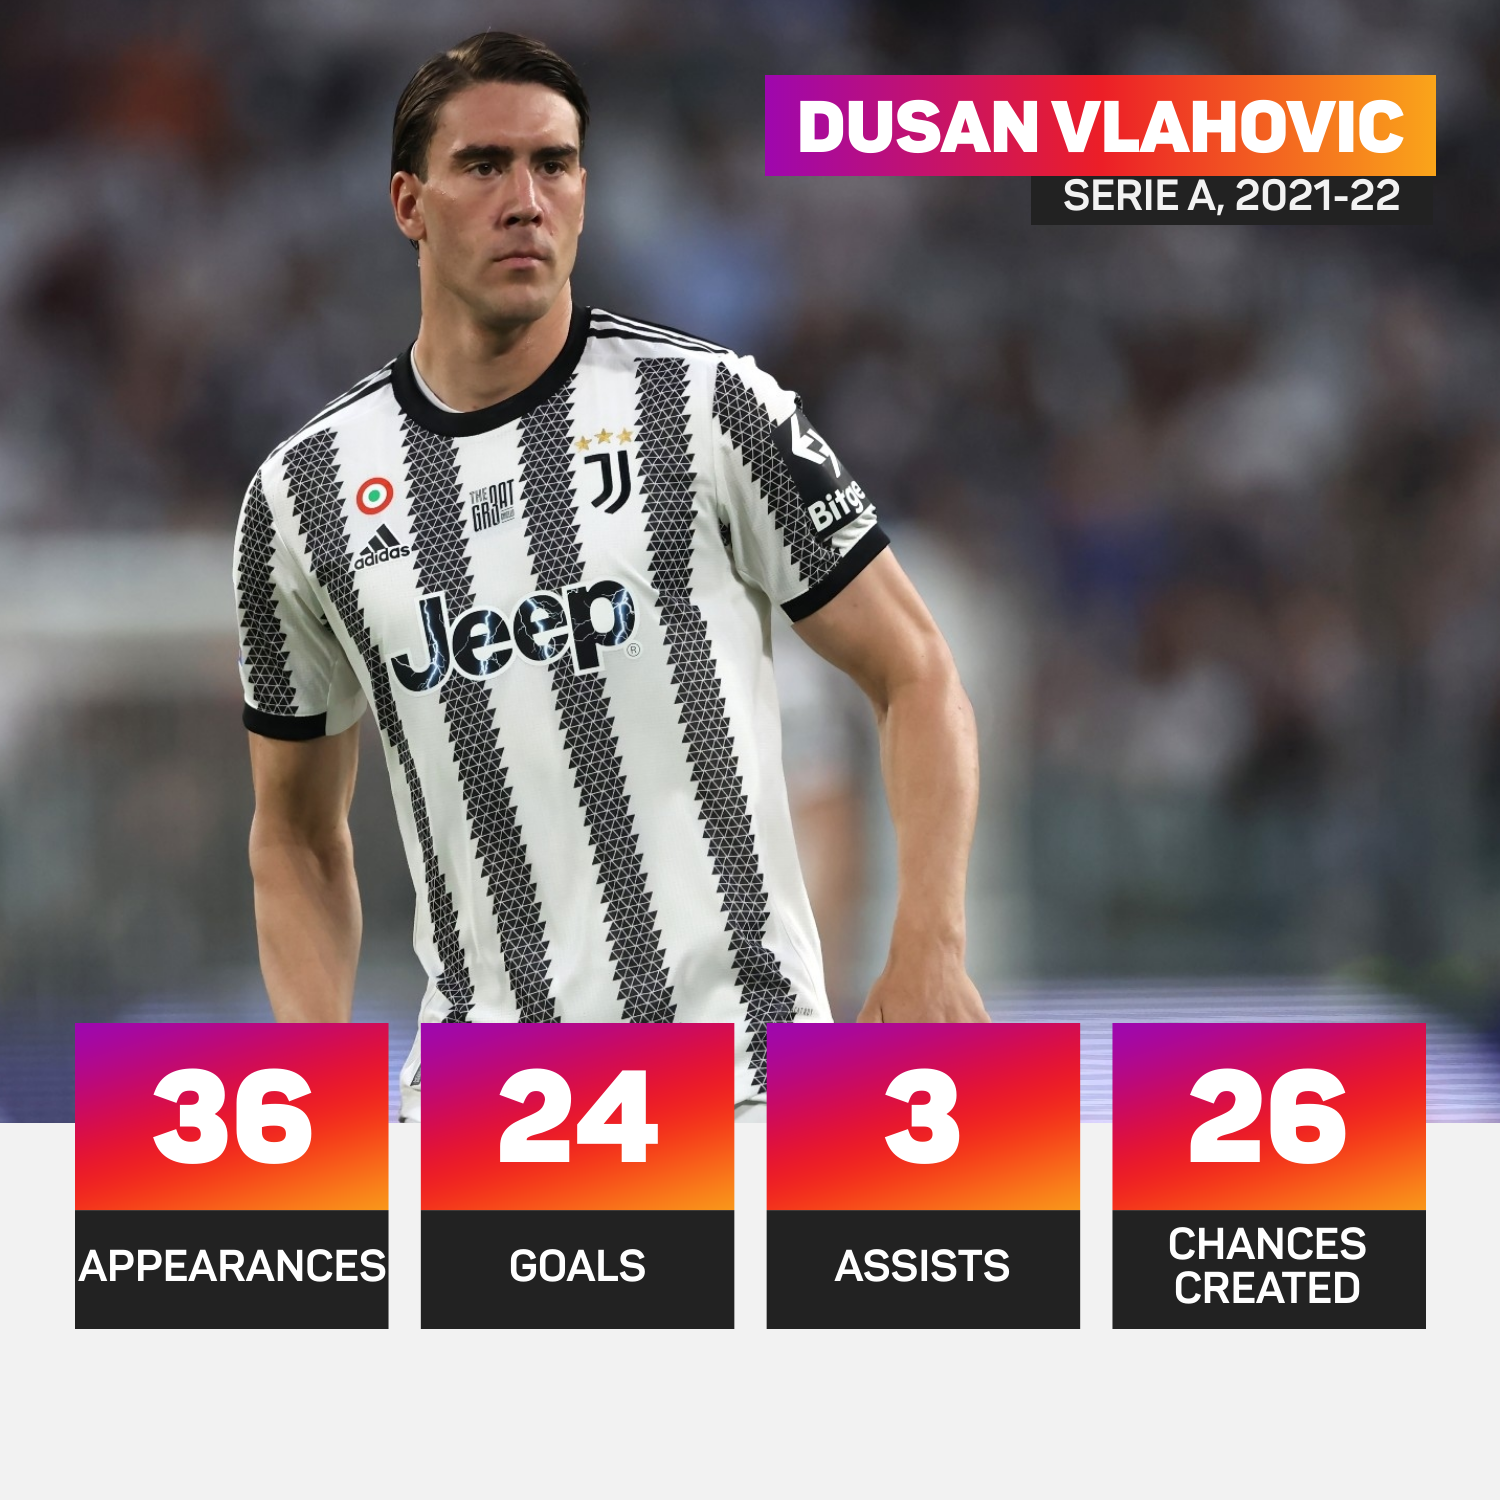 Dusan Vlahovic scored 24 Serie A goals last season